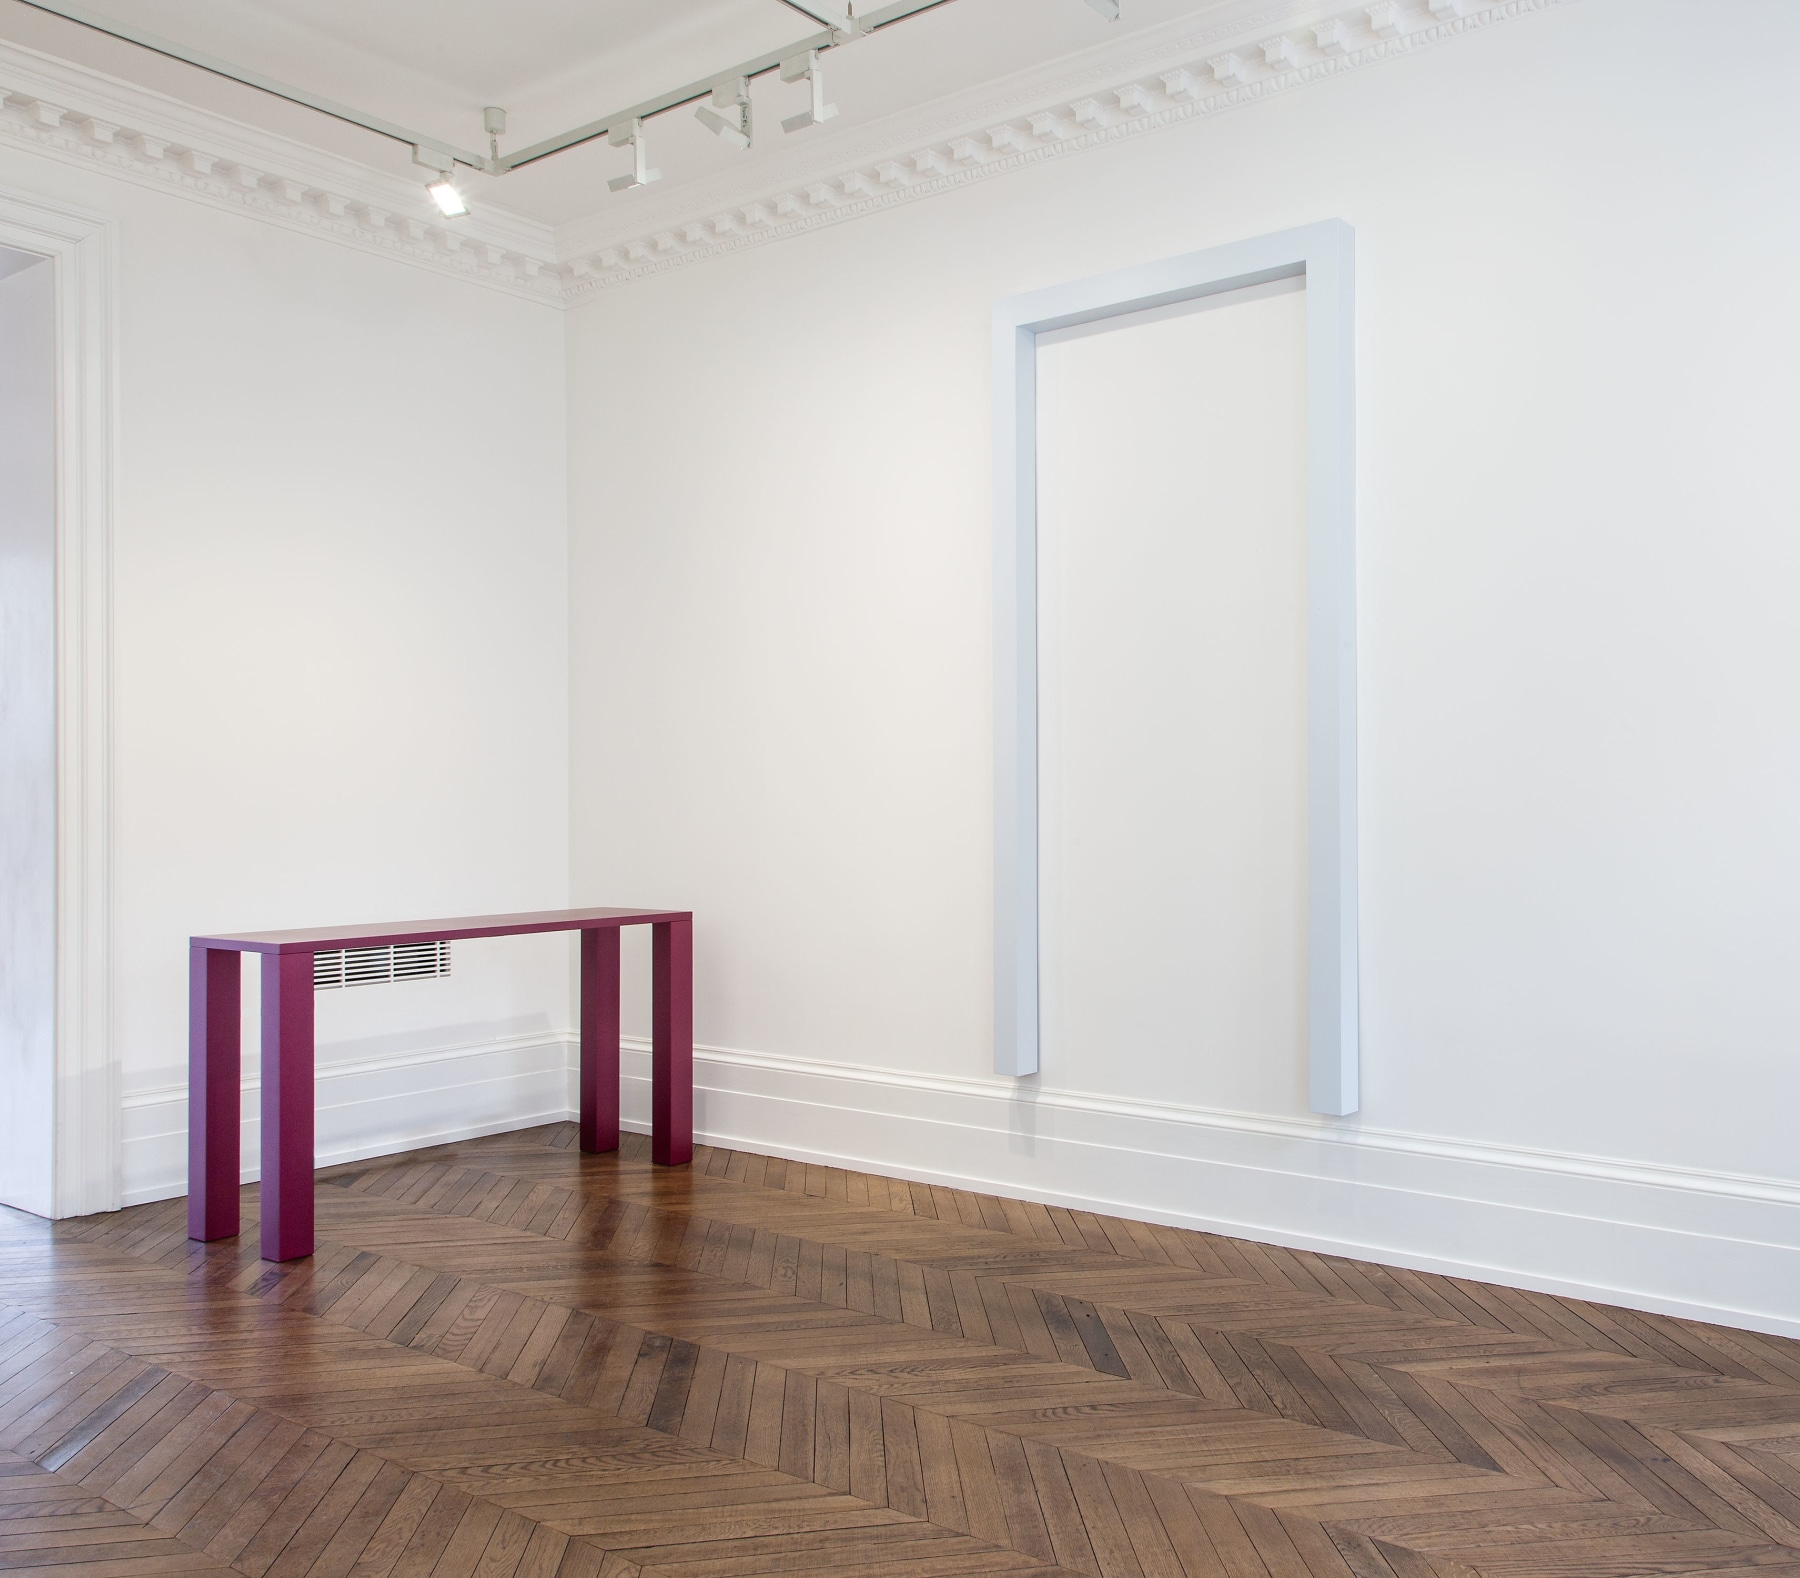 GIANNI PIACENTINO, WORKS 1965-2006, London, 2015, Installation Image 11